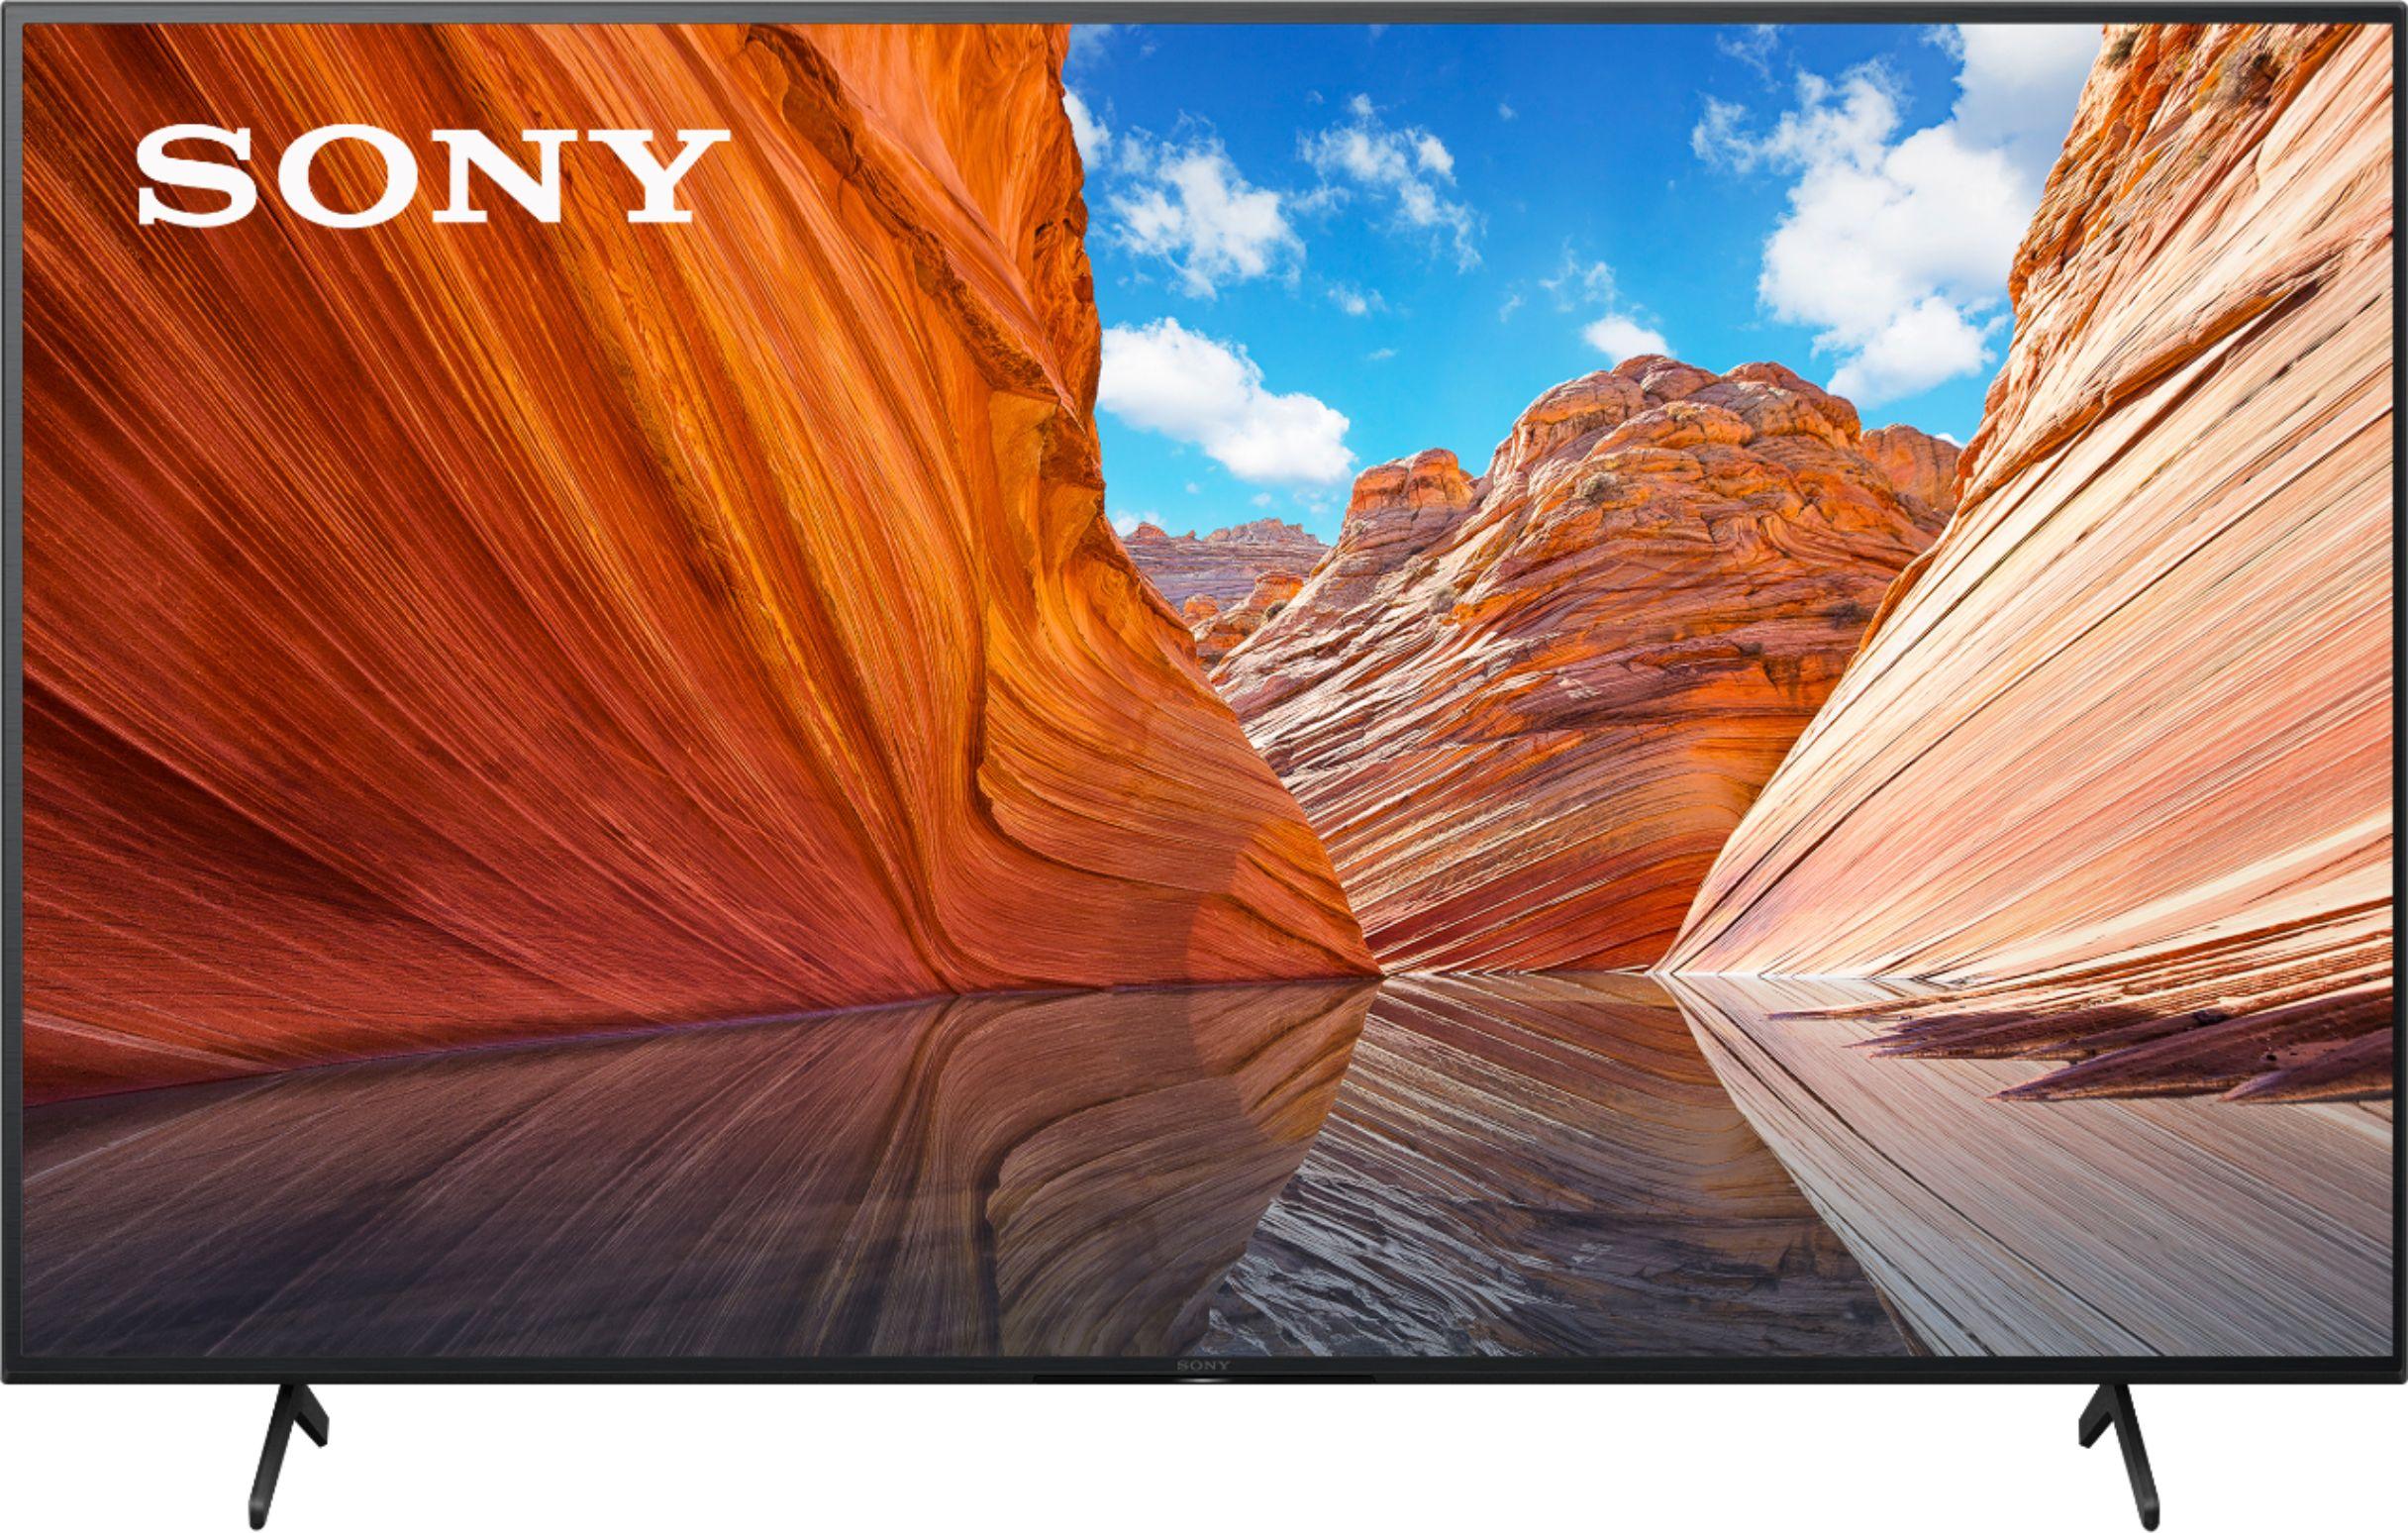 75in Sony X80J 4K Ultra HD LED Smart TV for $629.99 Shipped